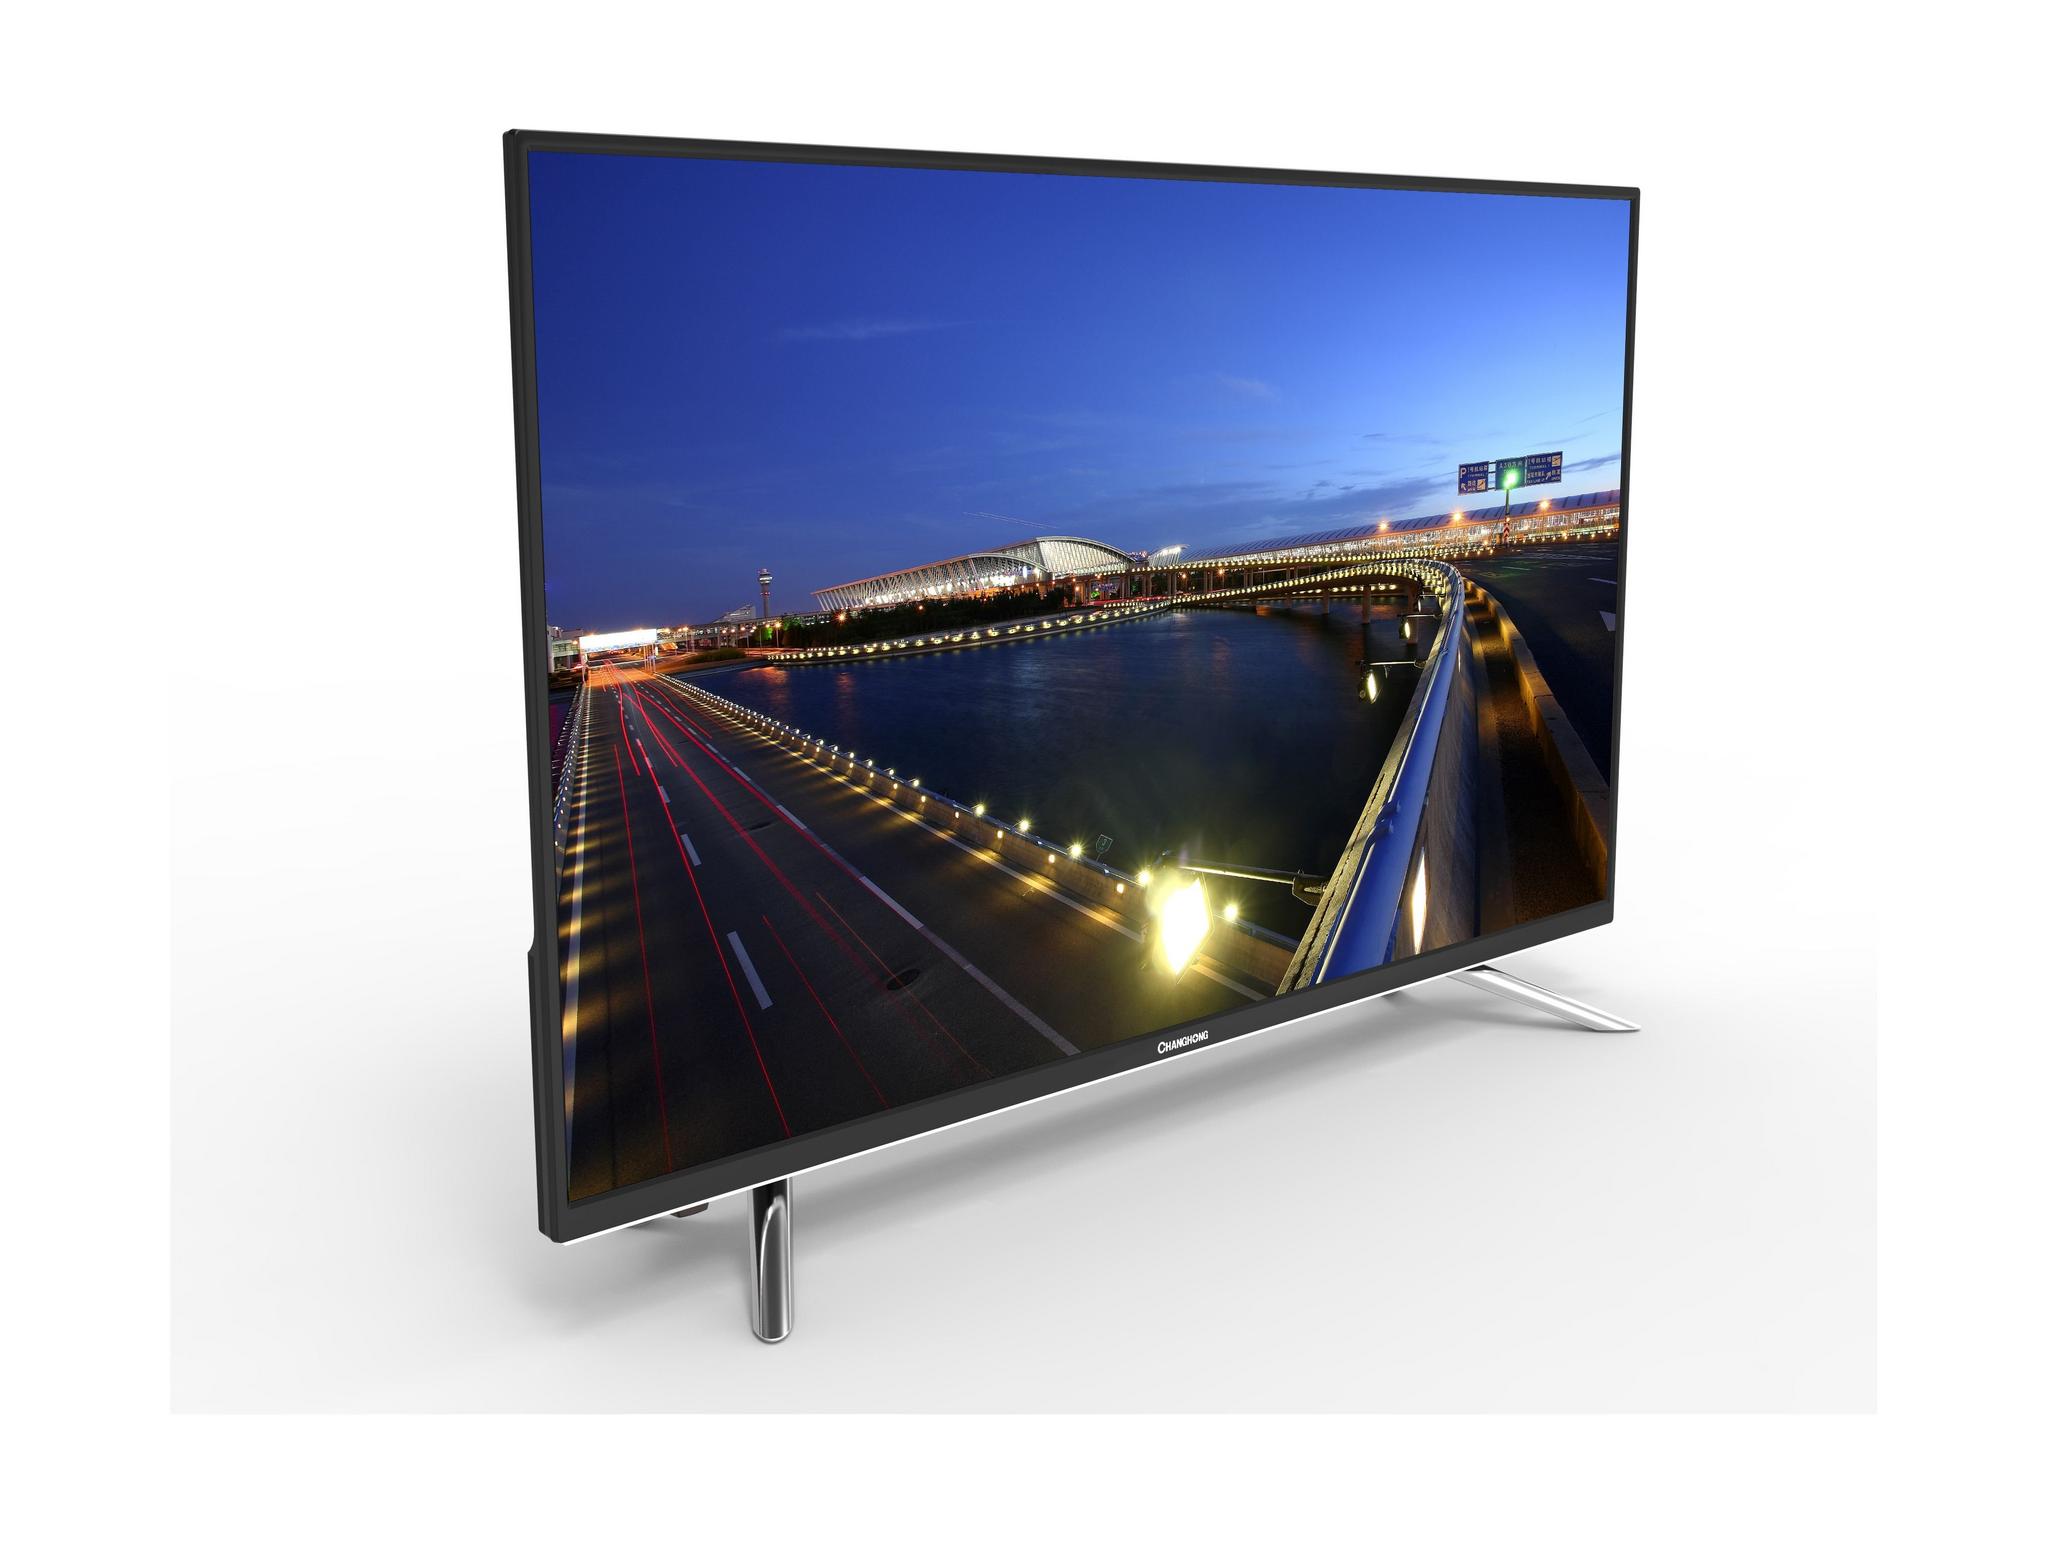 Changhong 43-inch Full HD (1080p) LED TV - LED43D2200